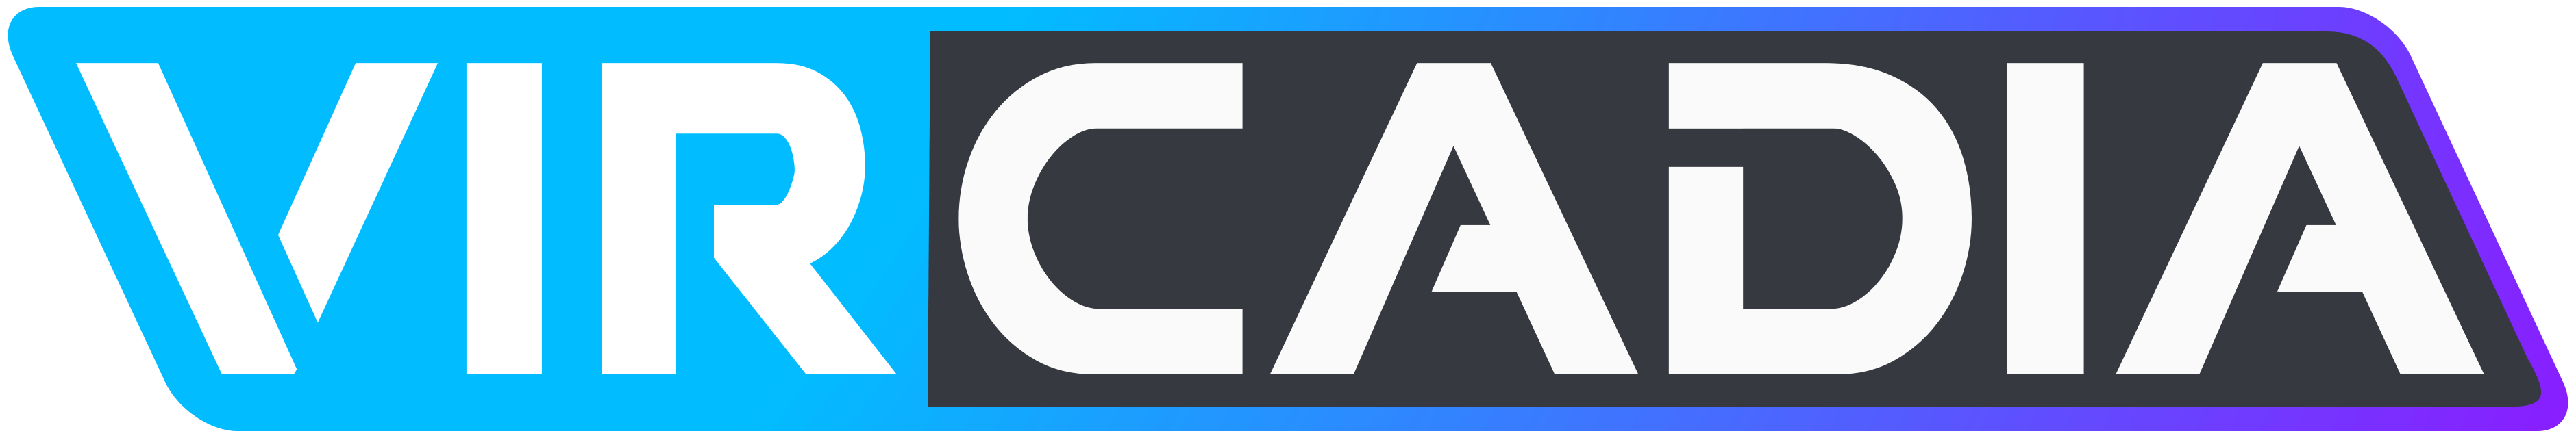 Logo Arena Vircadia